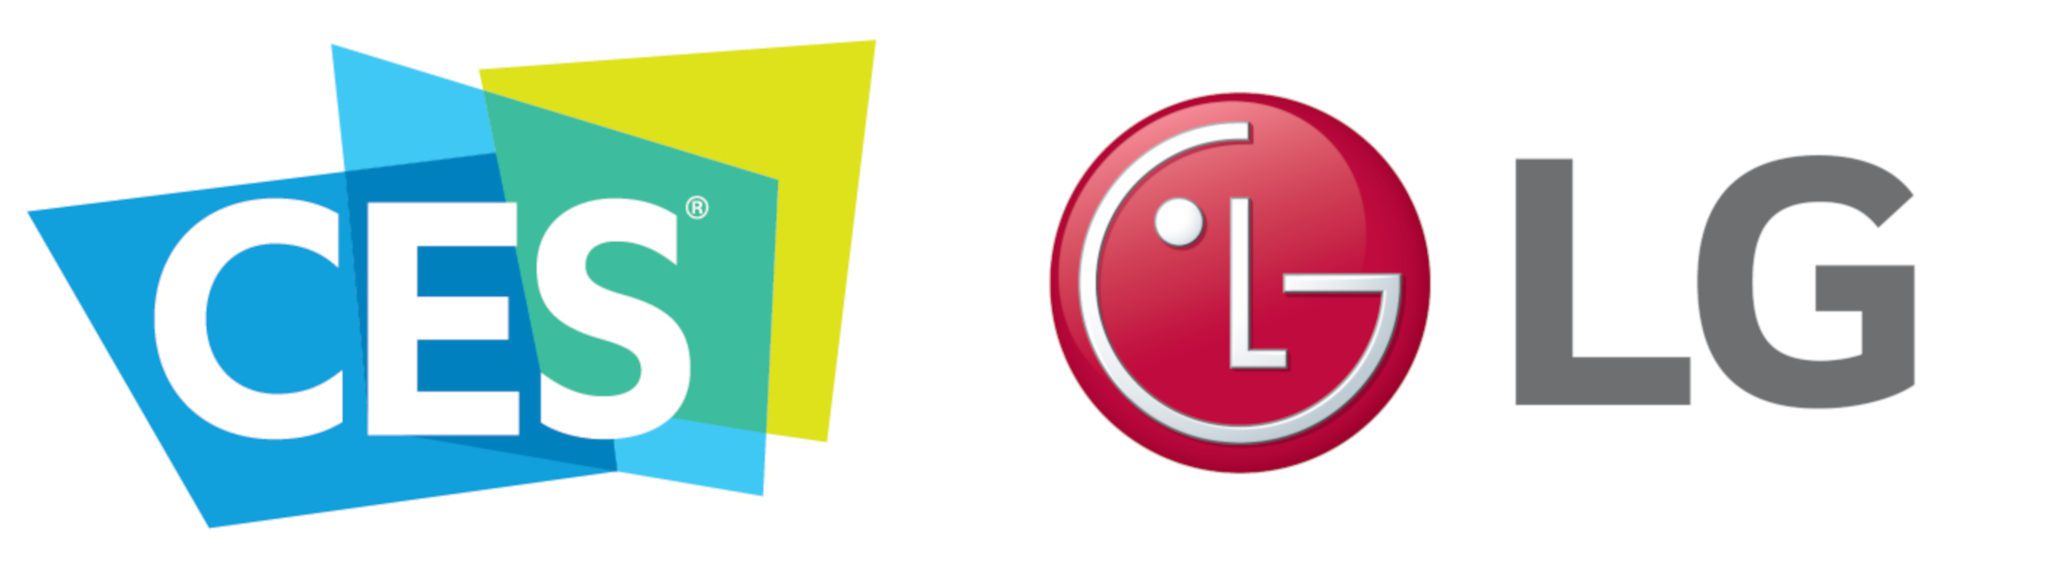 Lg Ces Logos